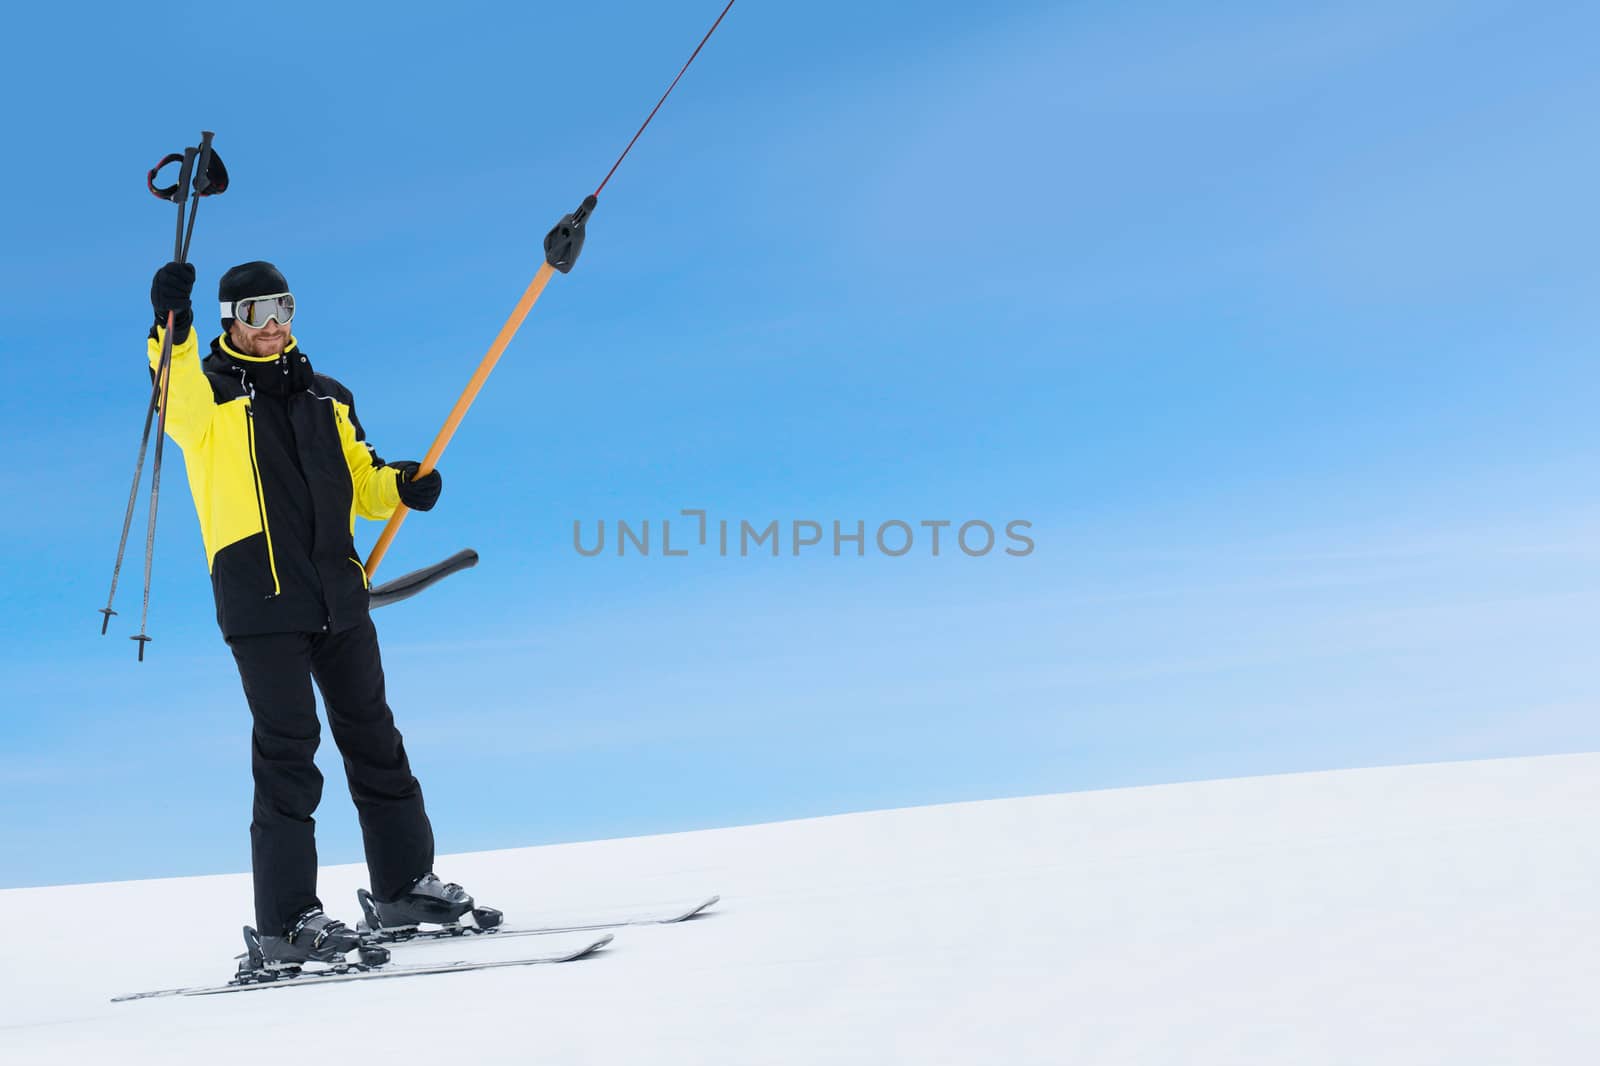 Happy skier using T-bar ski drag lift by destillat